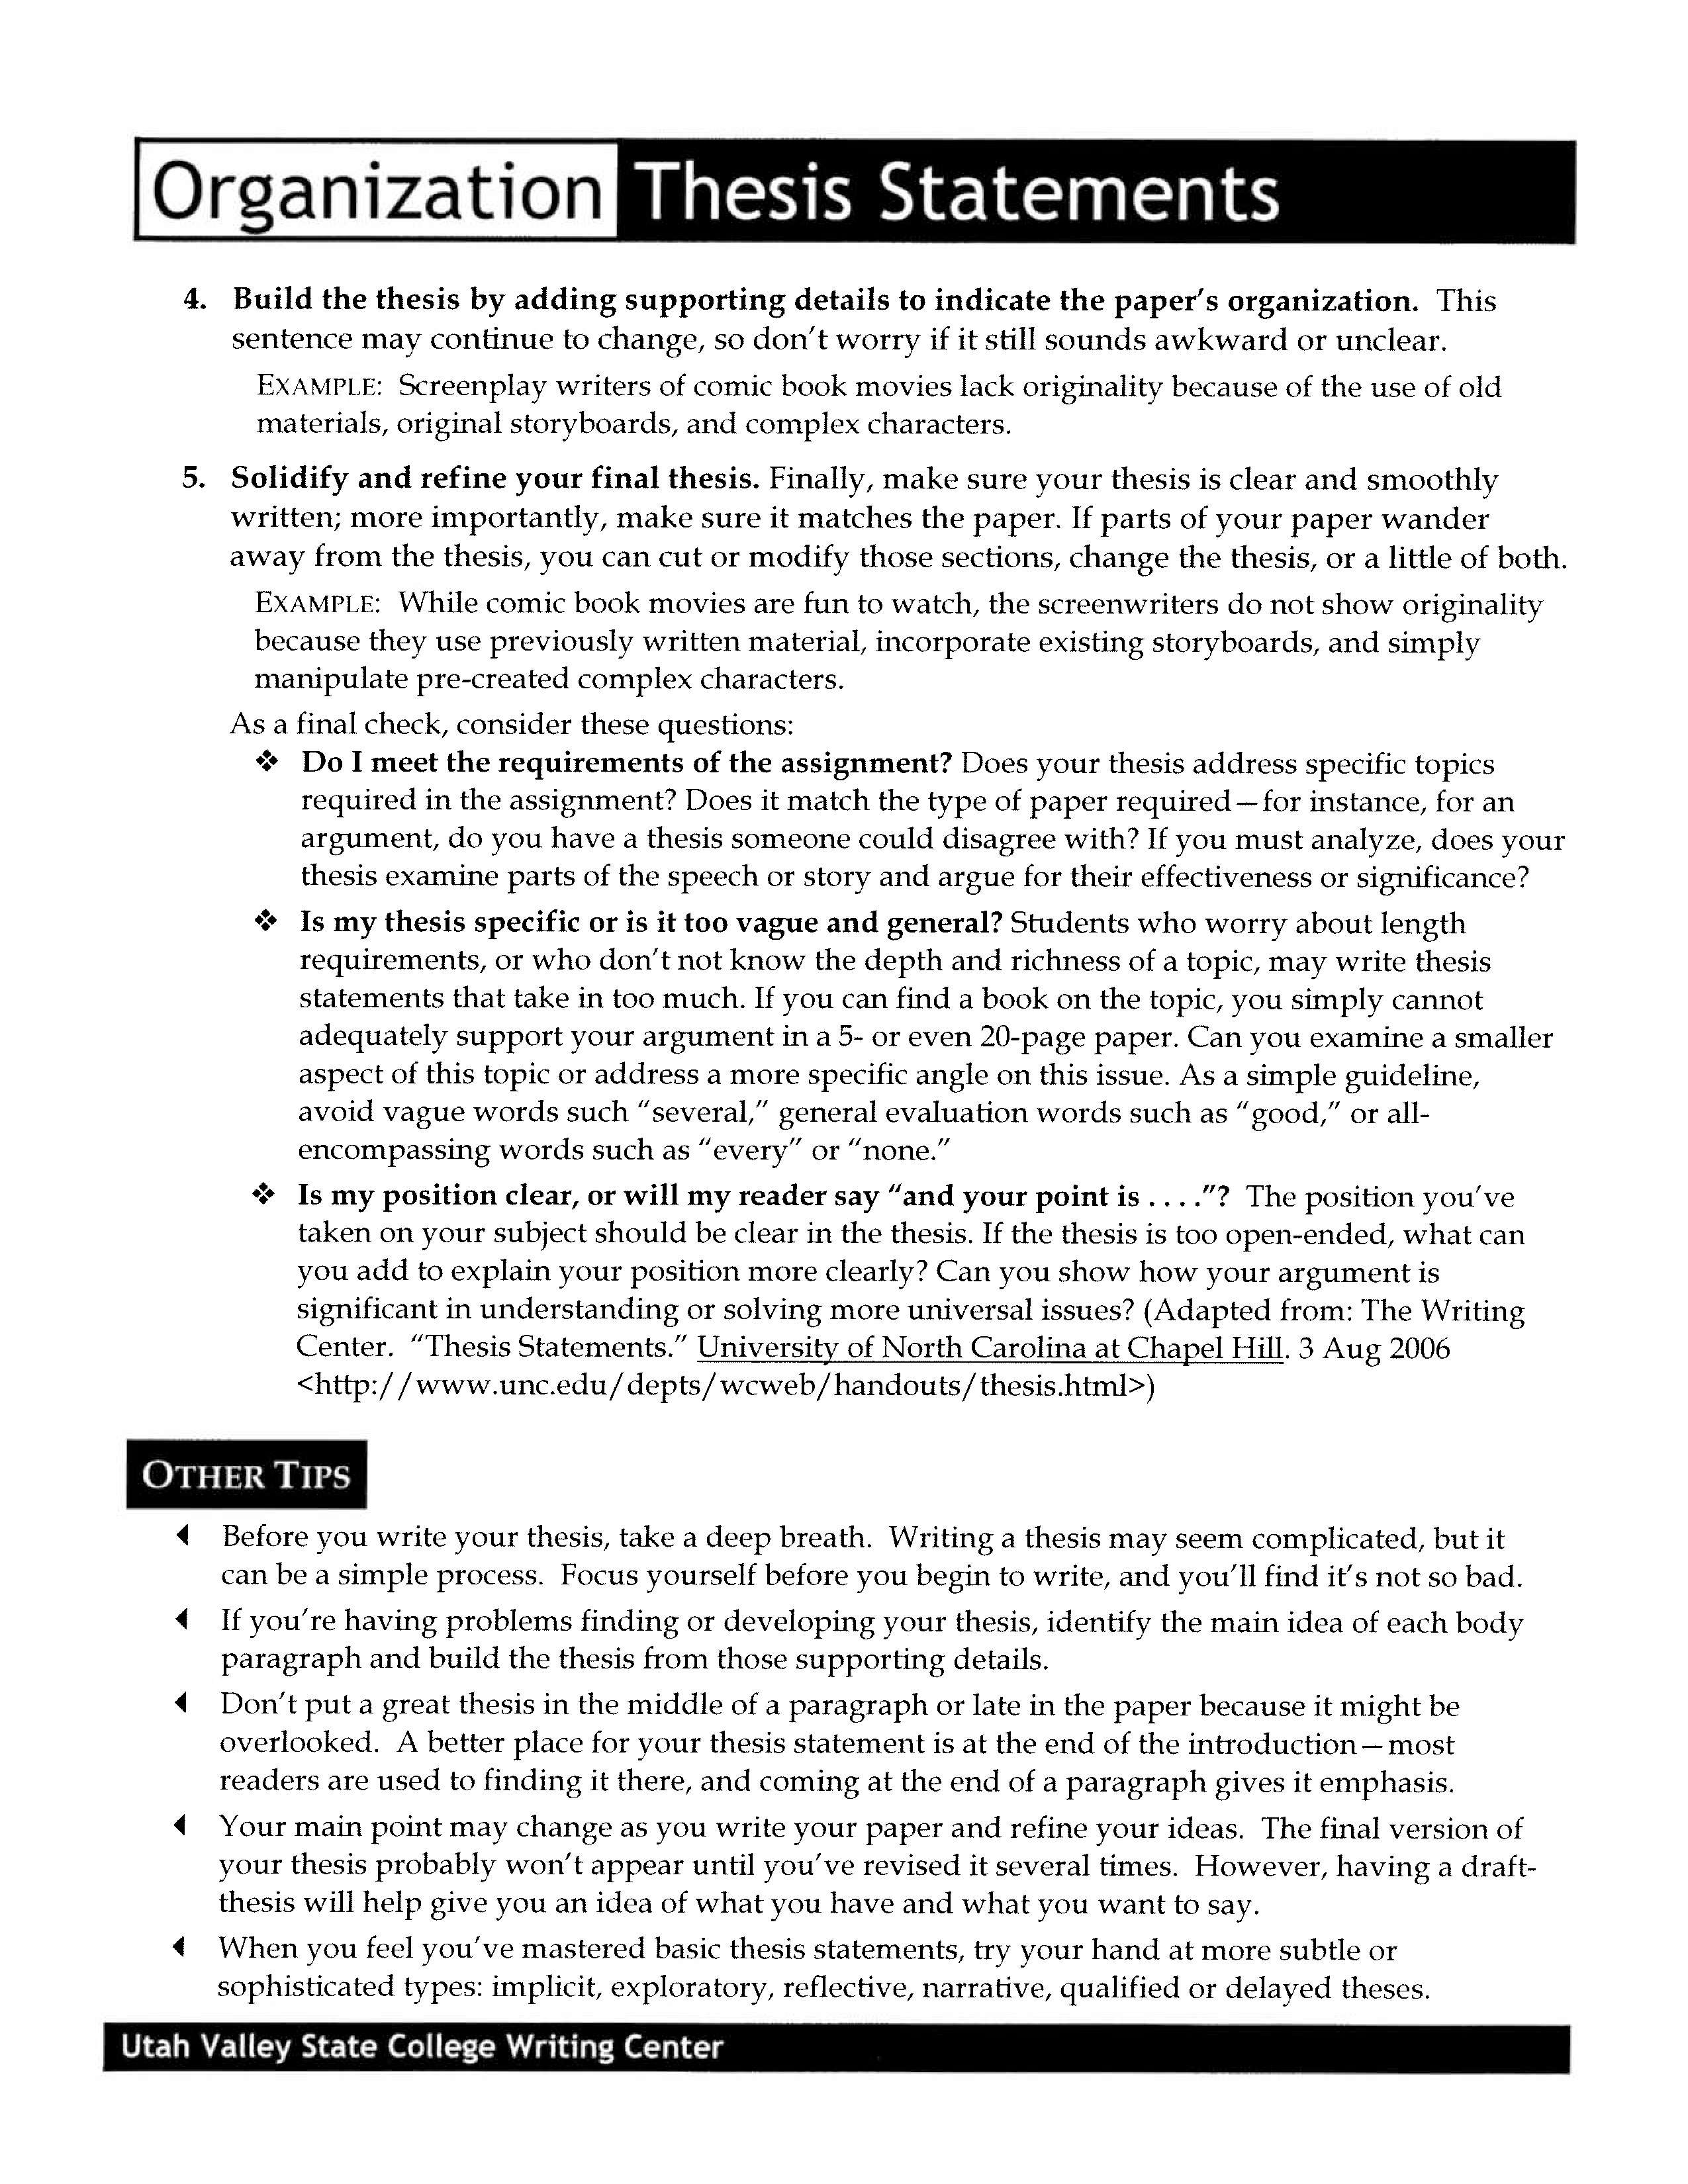 organization thesis statement template